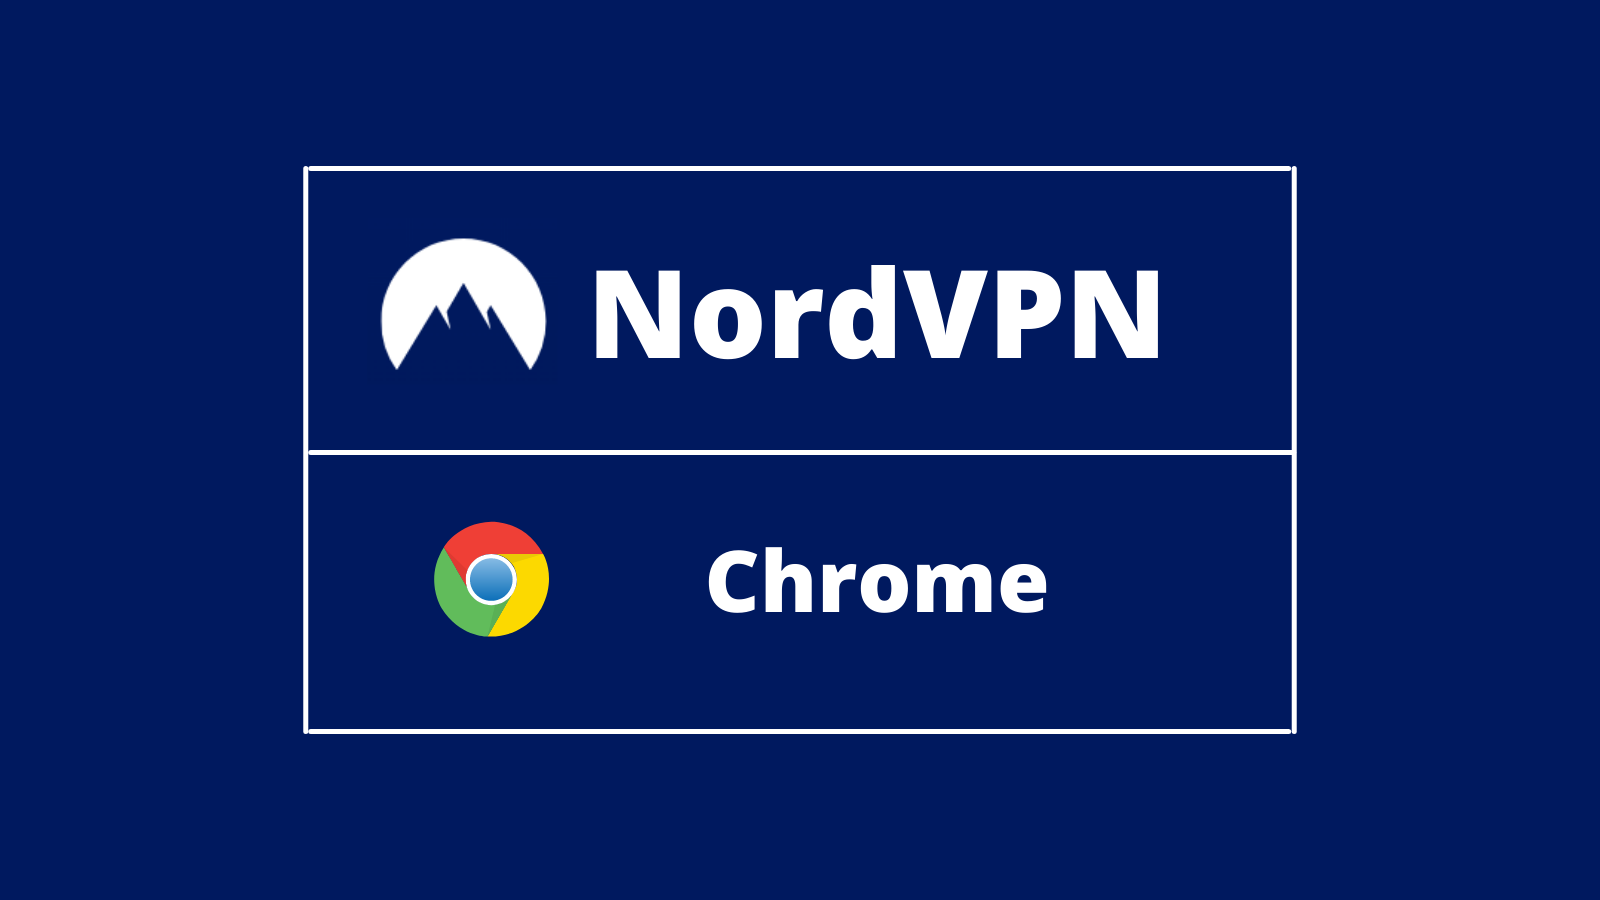 nordvpn extension download